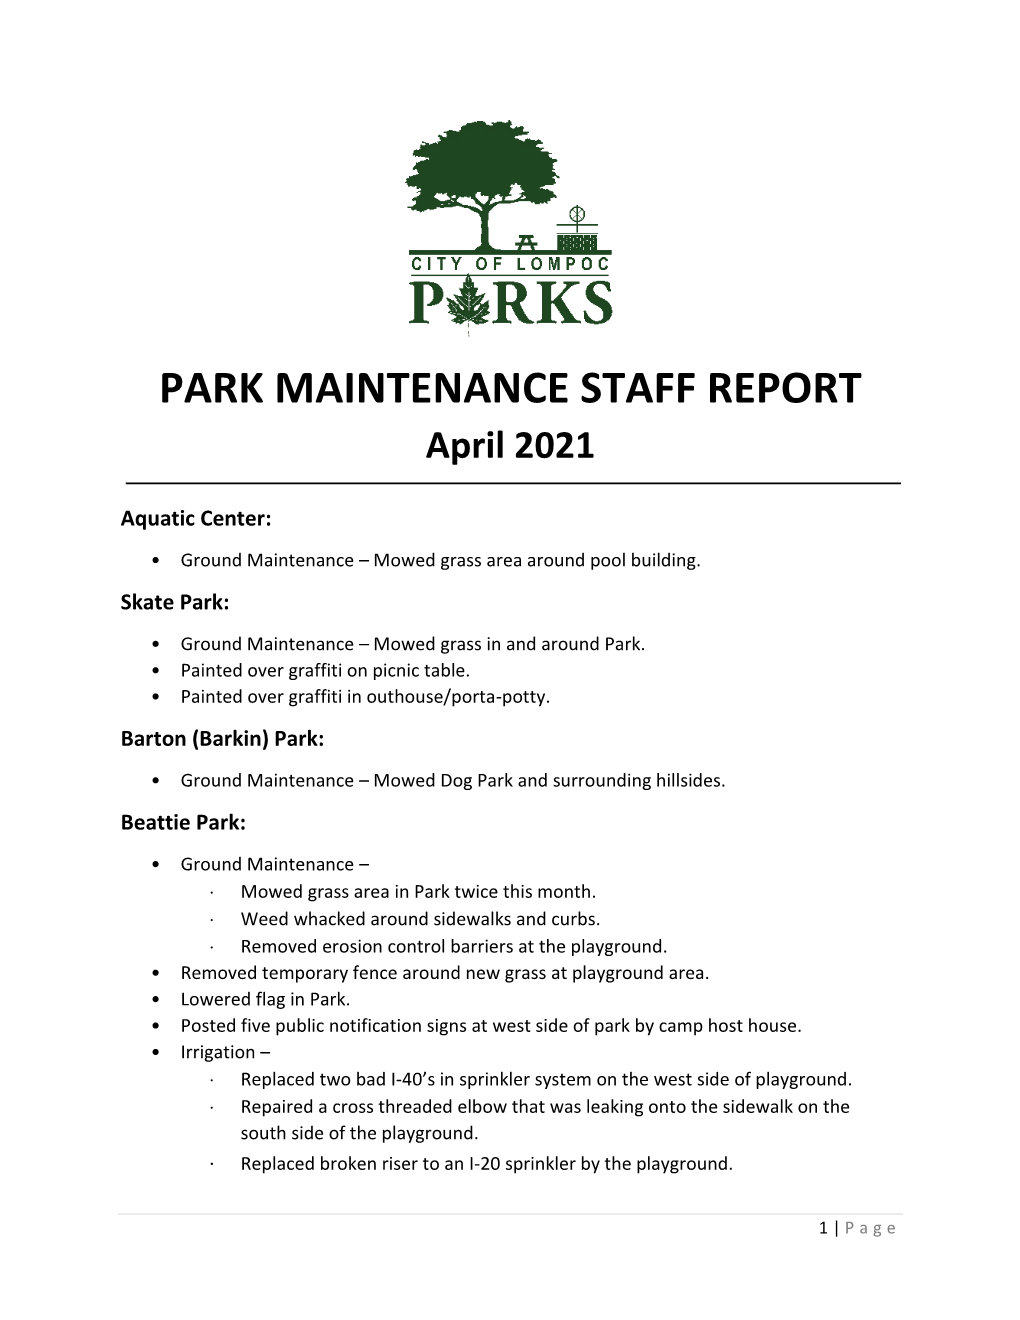 PARK MAINTENANCE STAFF REPORT April 2021